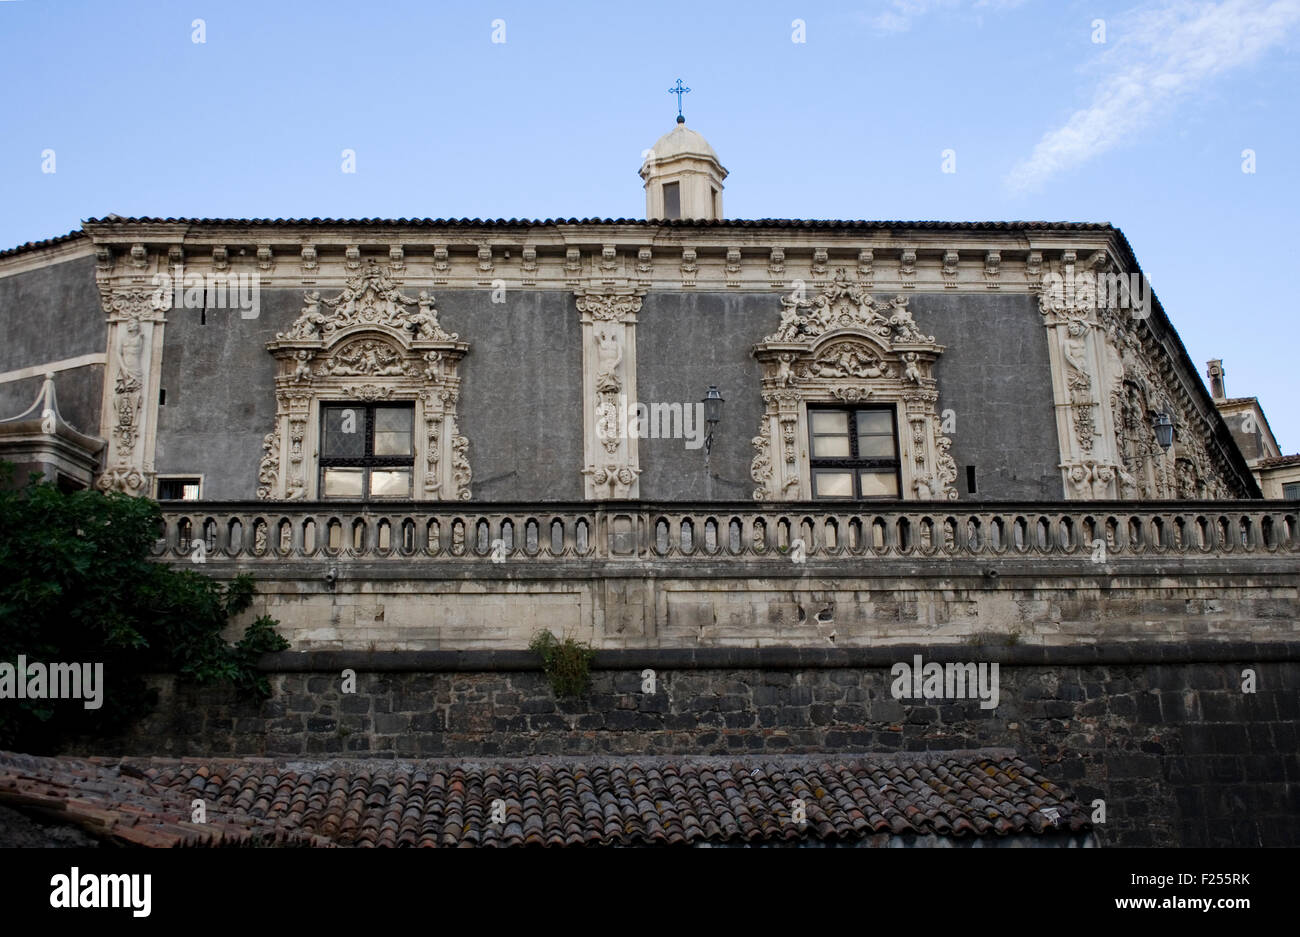 Balkon des barocken Palazzo Biscari, Catania - Italien Stockfoto